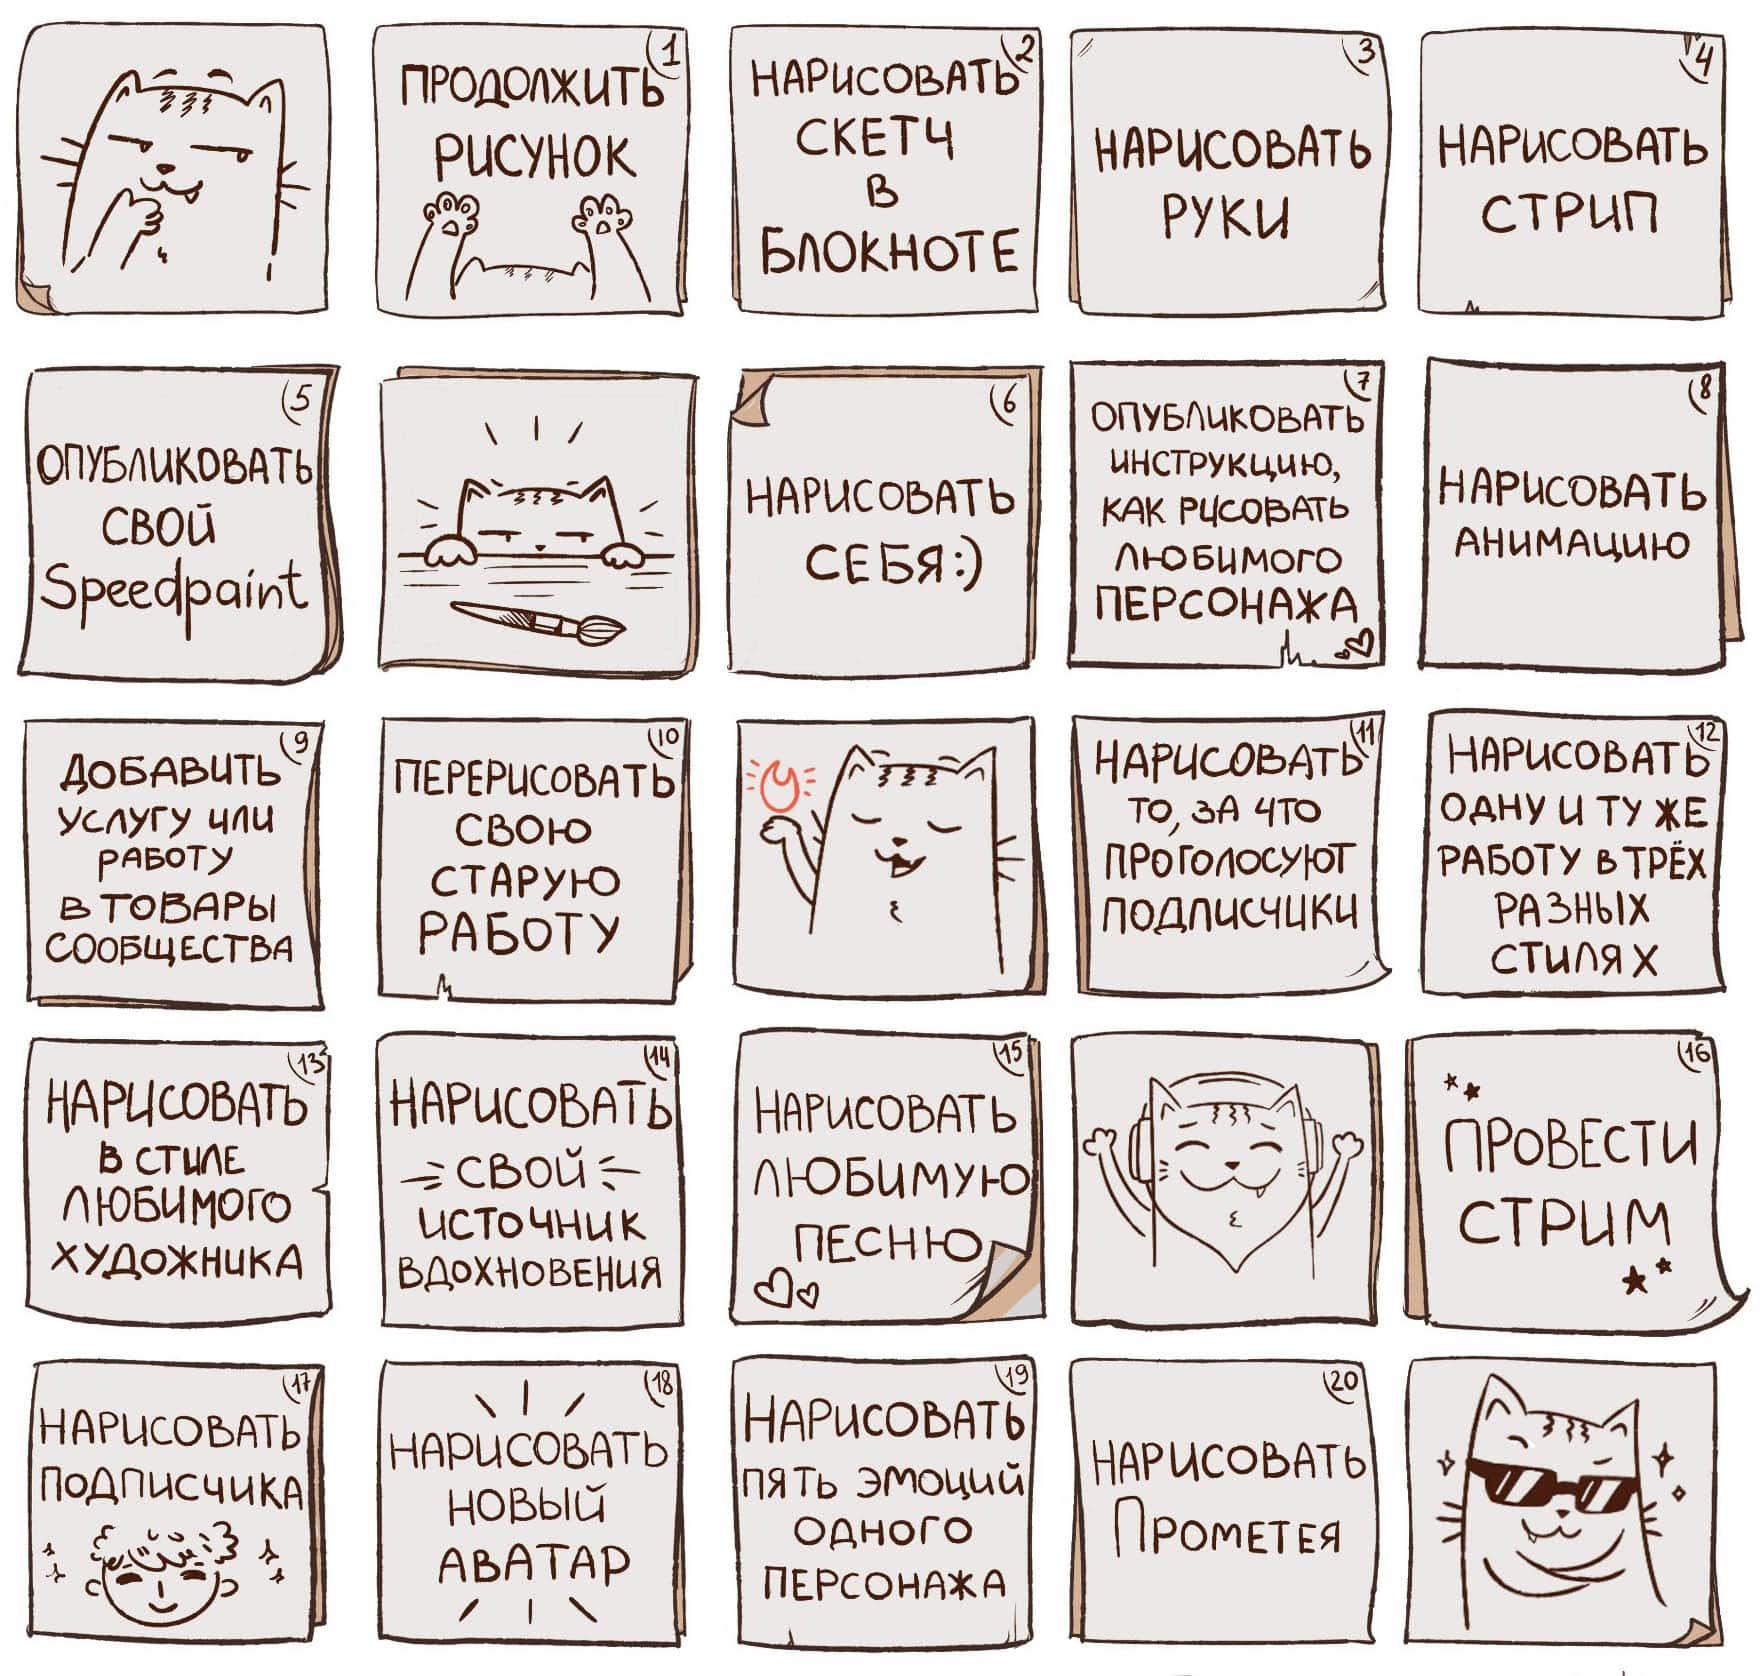 Конкурс «Бинго» от ВКонтакте